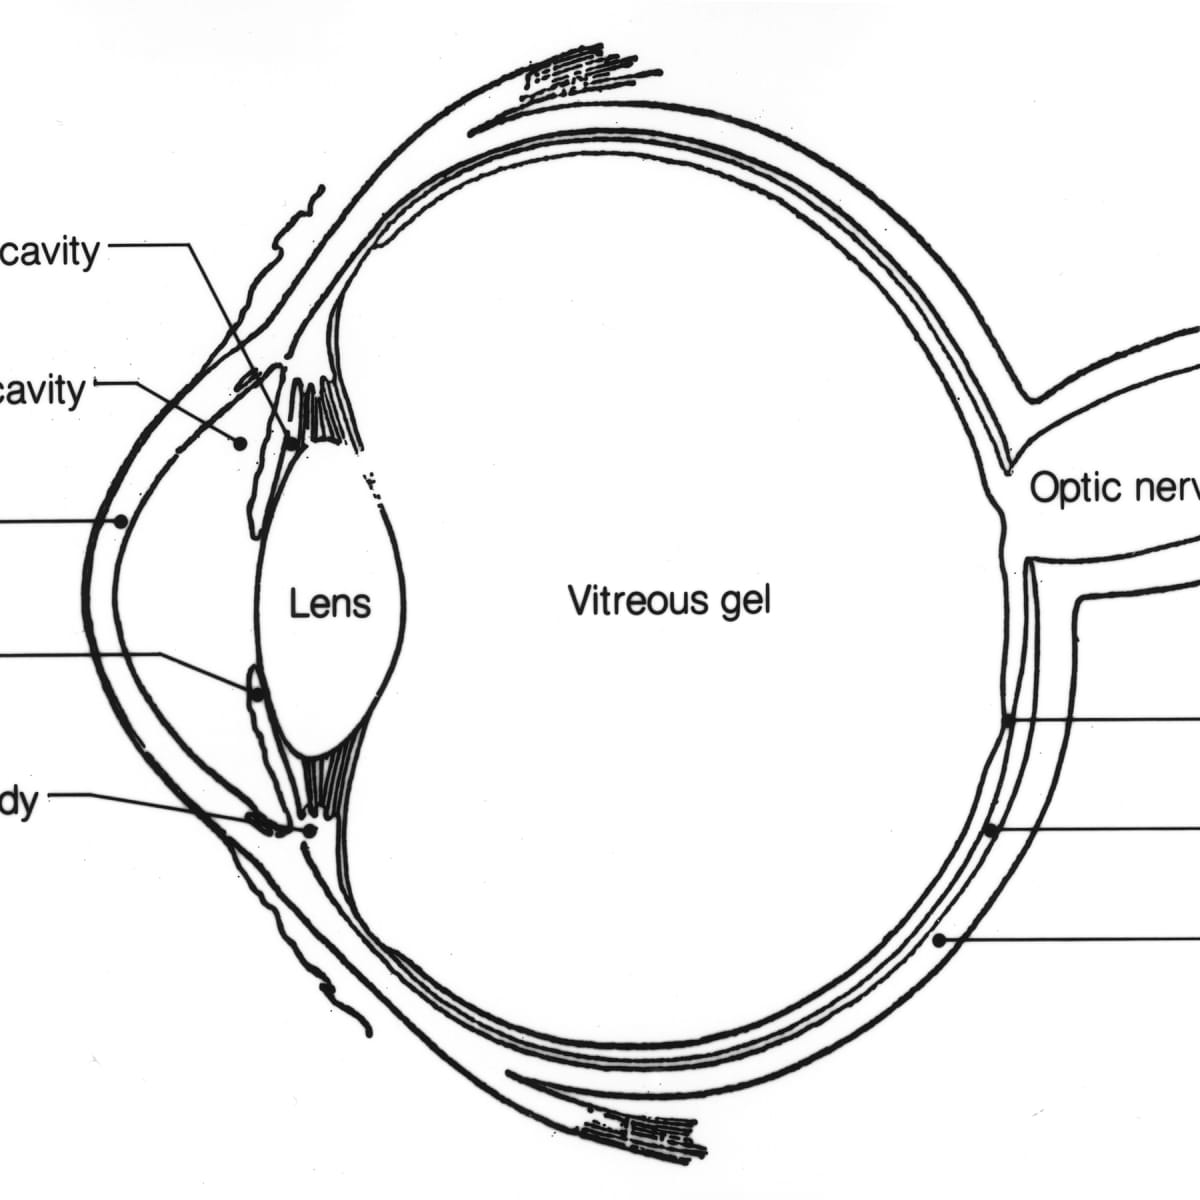 Anatomy of the Eye: Human Eye Anatomy - Owlcation